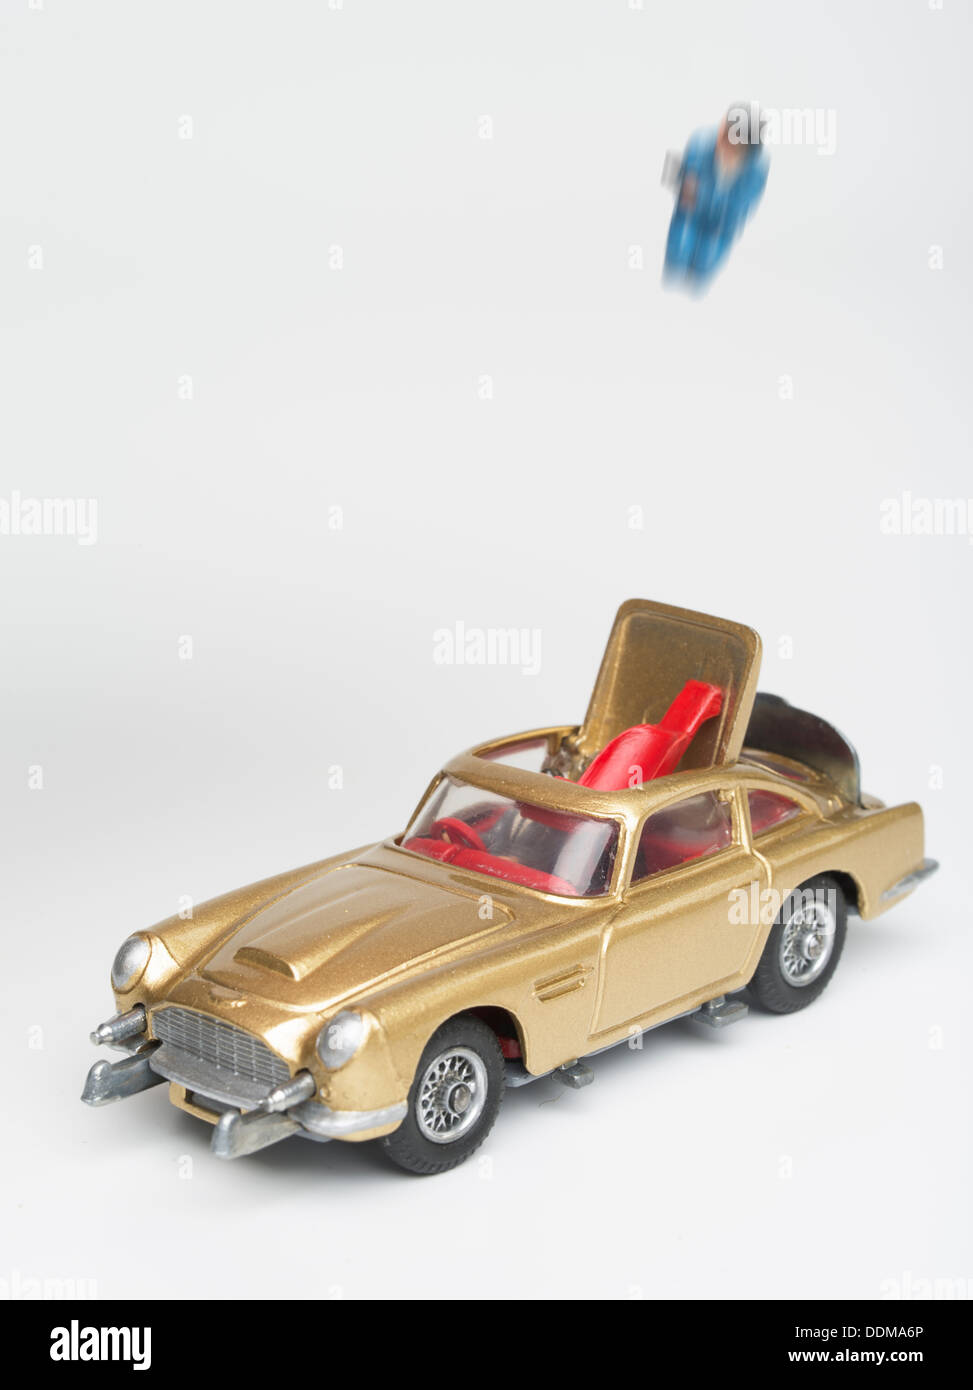 Corgi Toys (261)-Cast Model of James Bond's Aston Martin DB5 in Goldfinger mit Schleudersitz produziert im Jahr 1965 Stockfoto